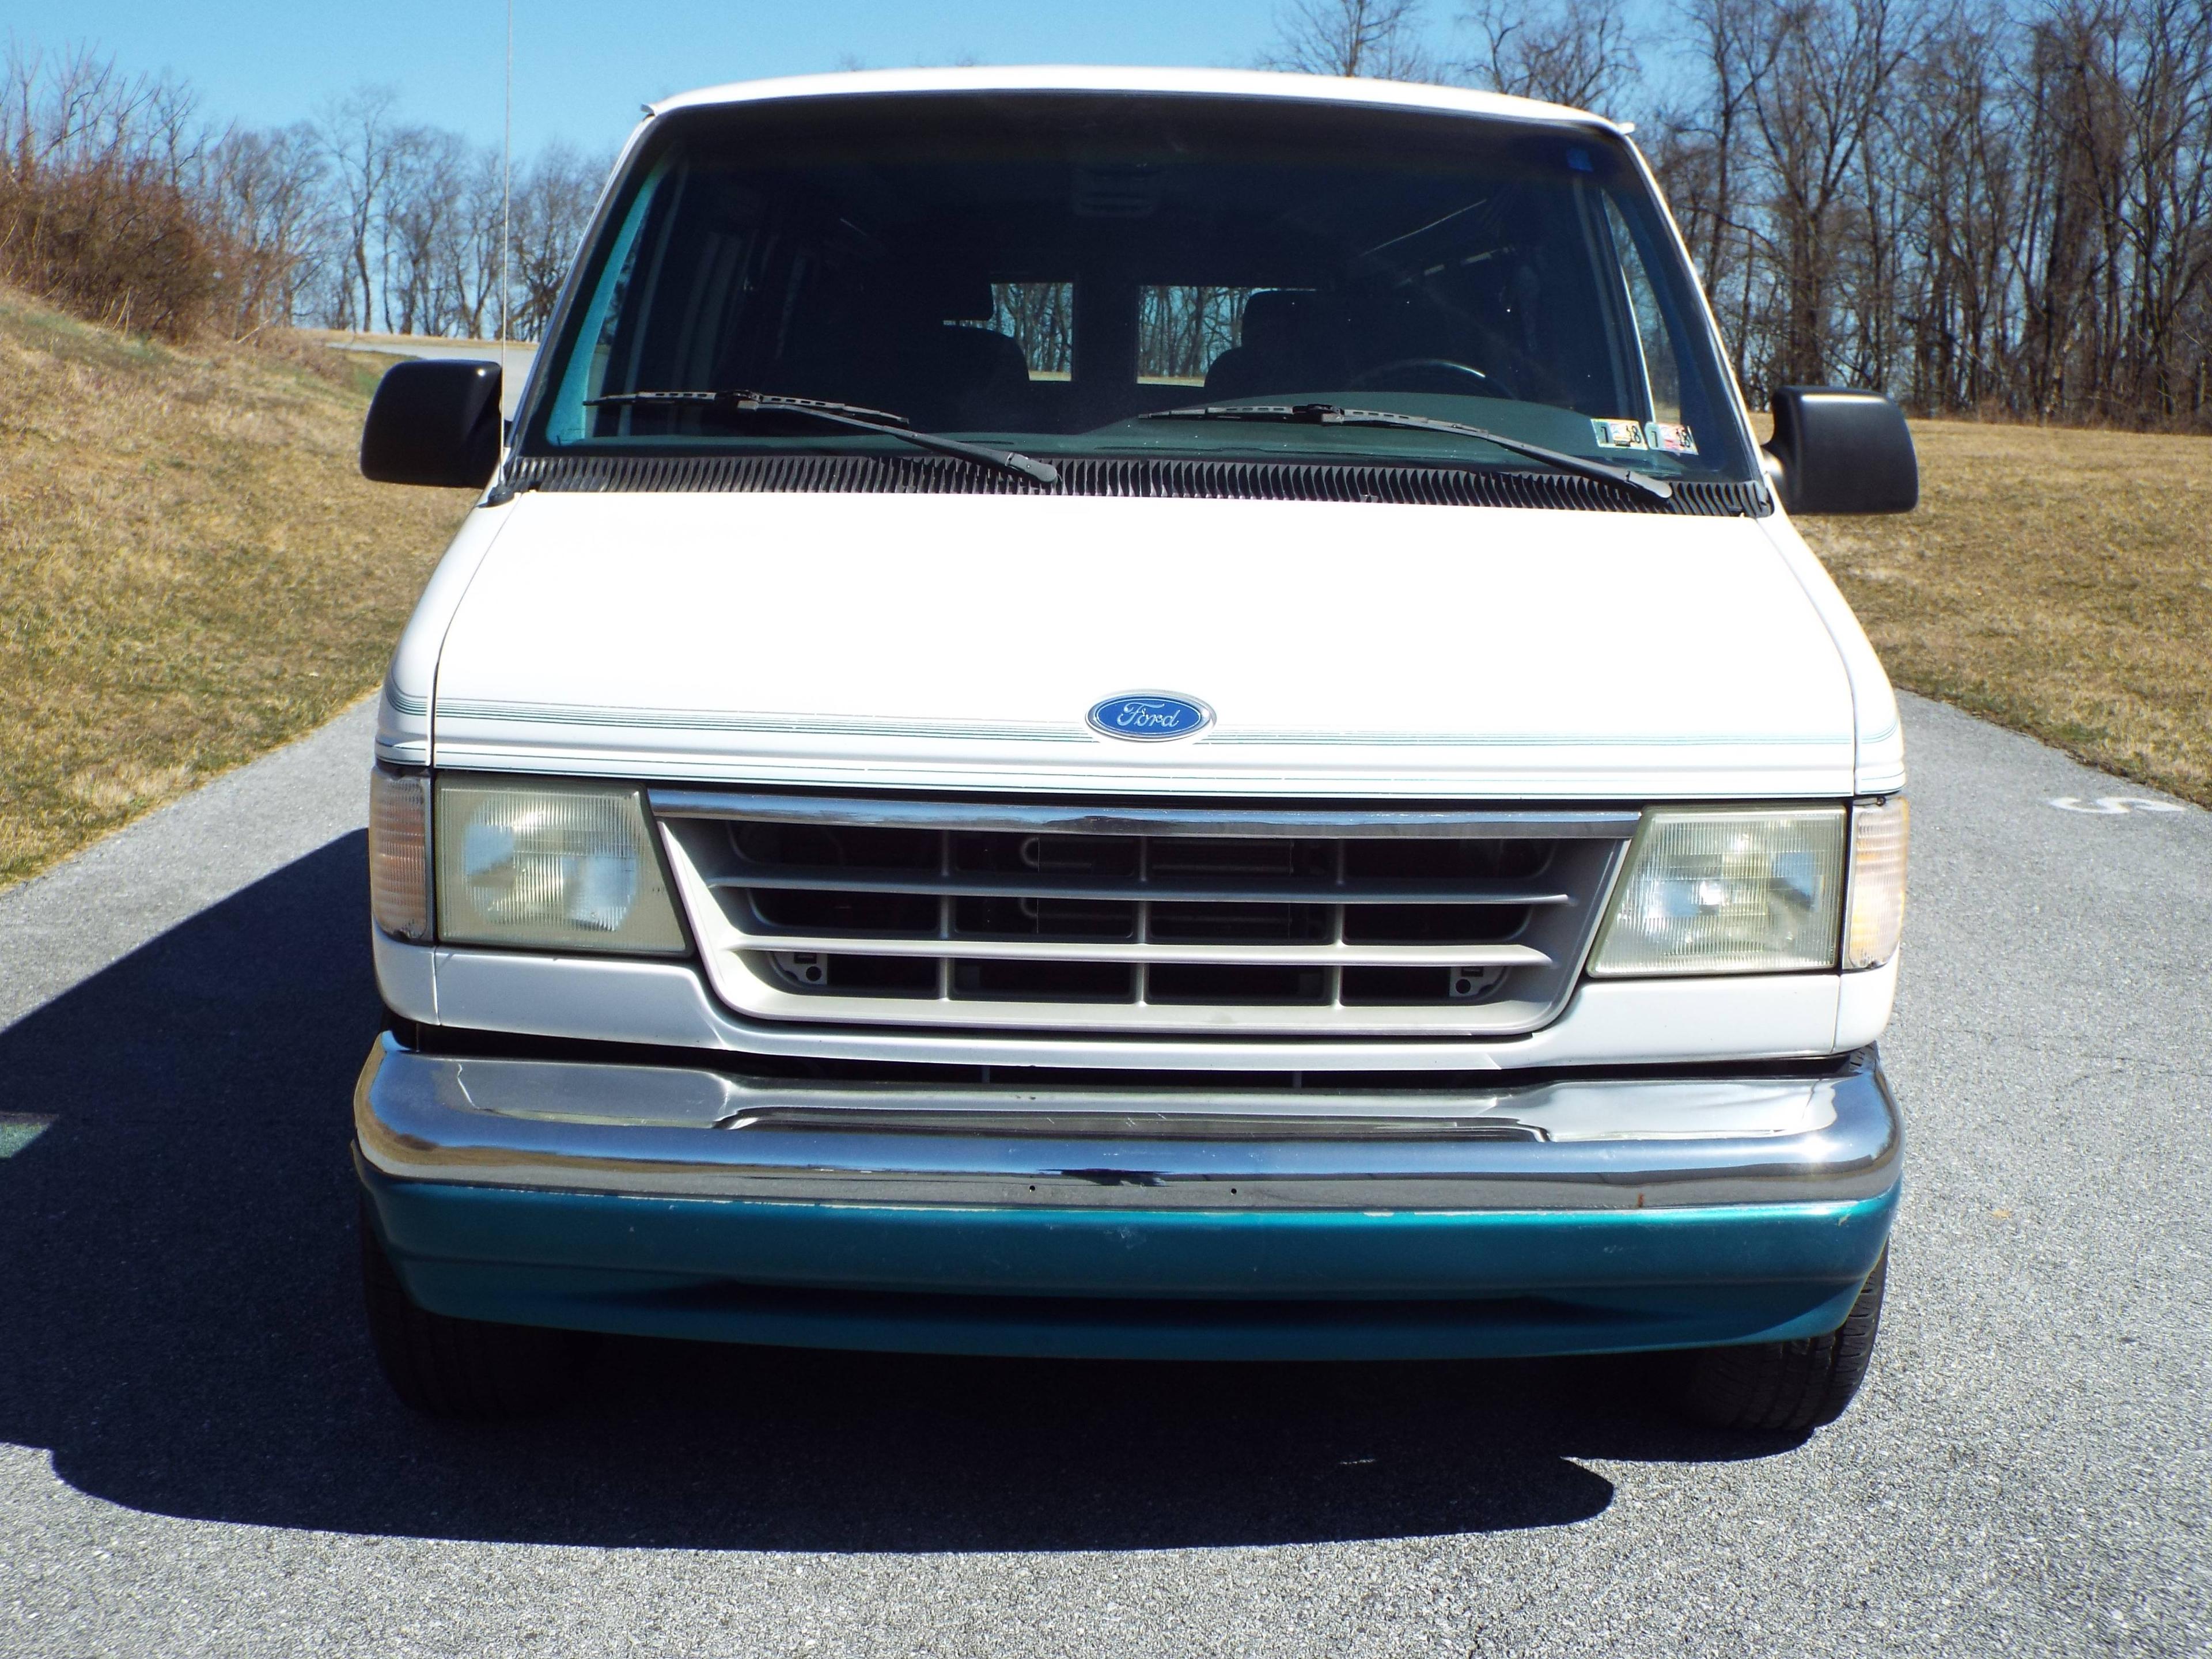 1993 Ford Econoline 150 Van.Runs and drives as it should. Newer Jasper tran